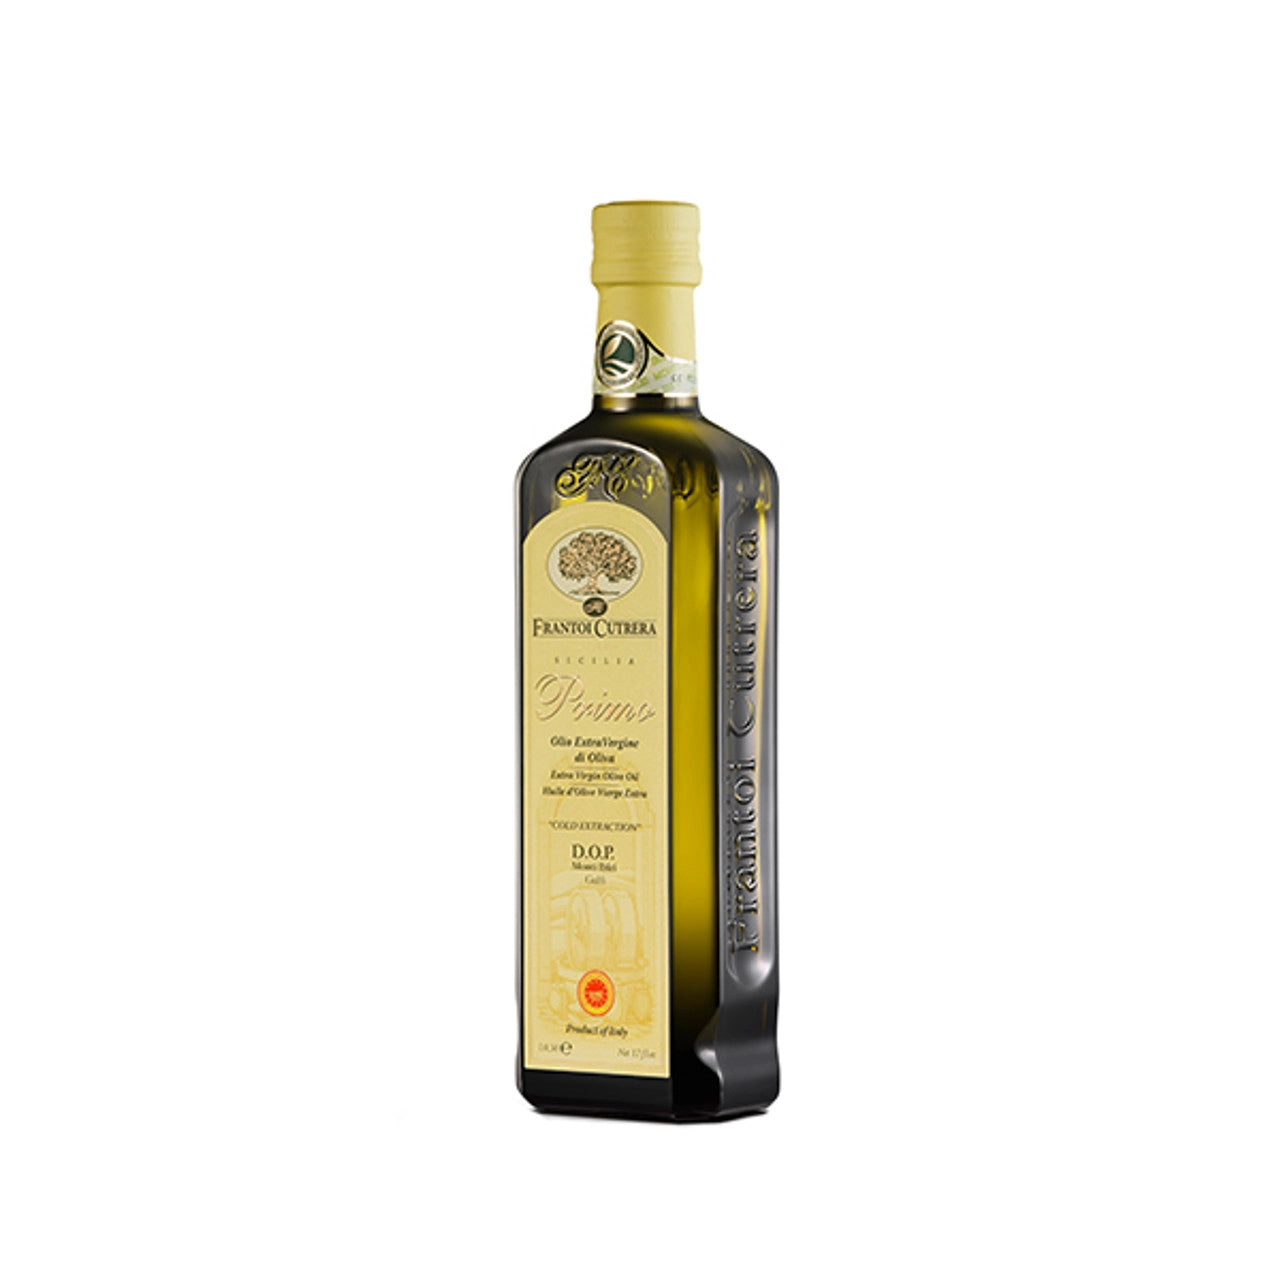 Frantoi Cutrera Primo, DOP, Monti Iblei, Organic Extra Virgin Olive Oil 16.9 oz